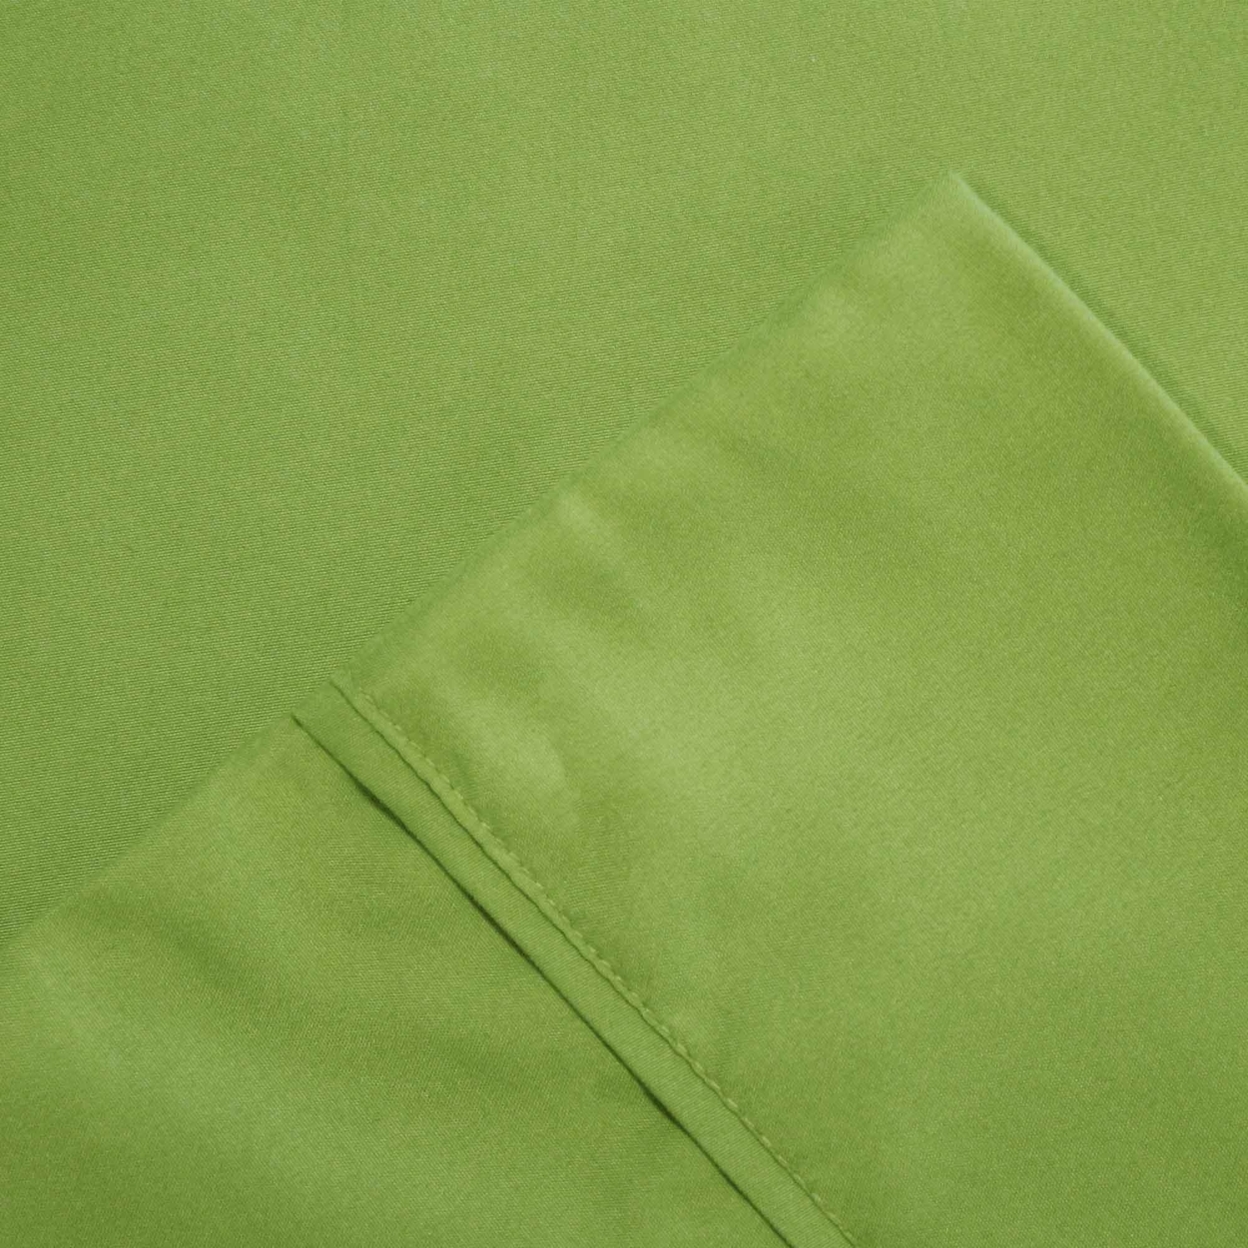 Bezons 4 Piece King Size Microfiber Sheet Set With 1800 Thread Count, Green- Saltoro Sherpi